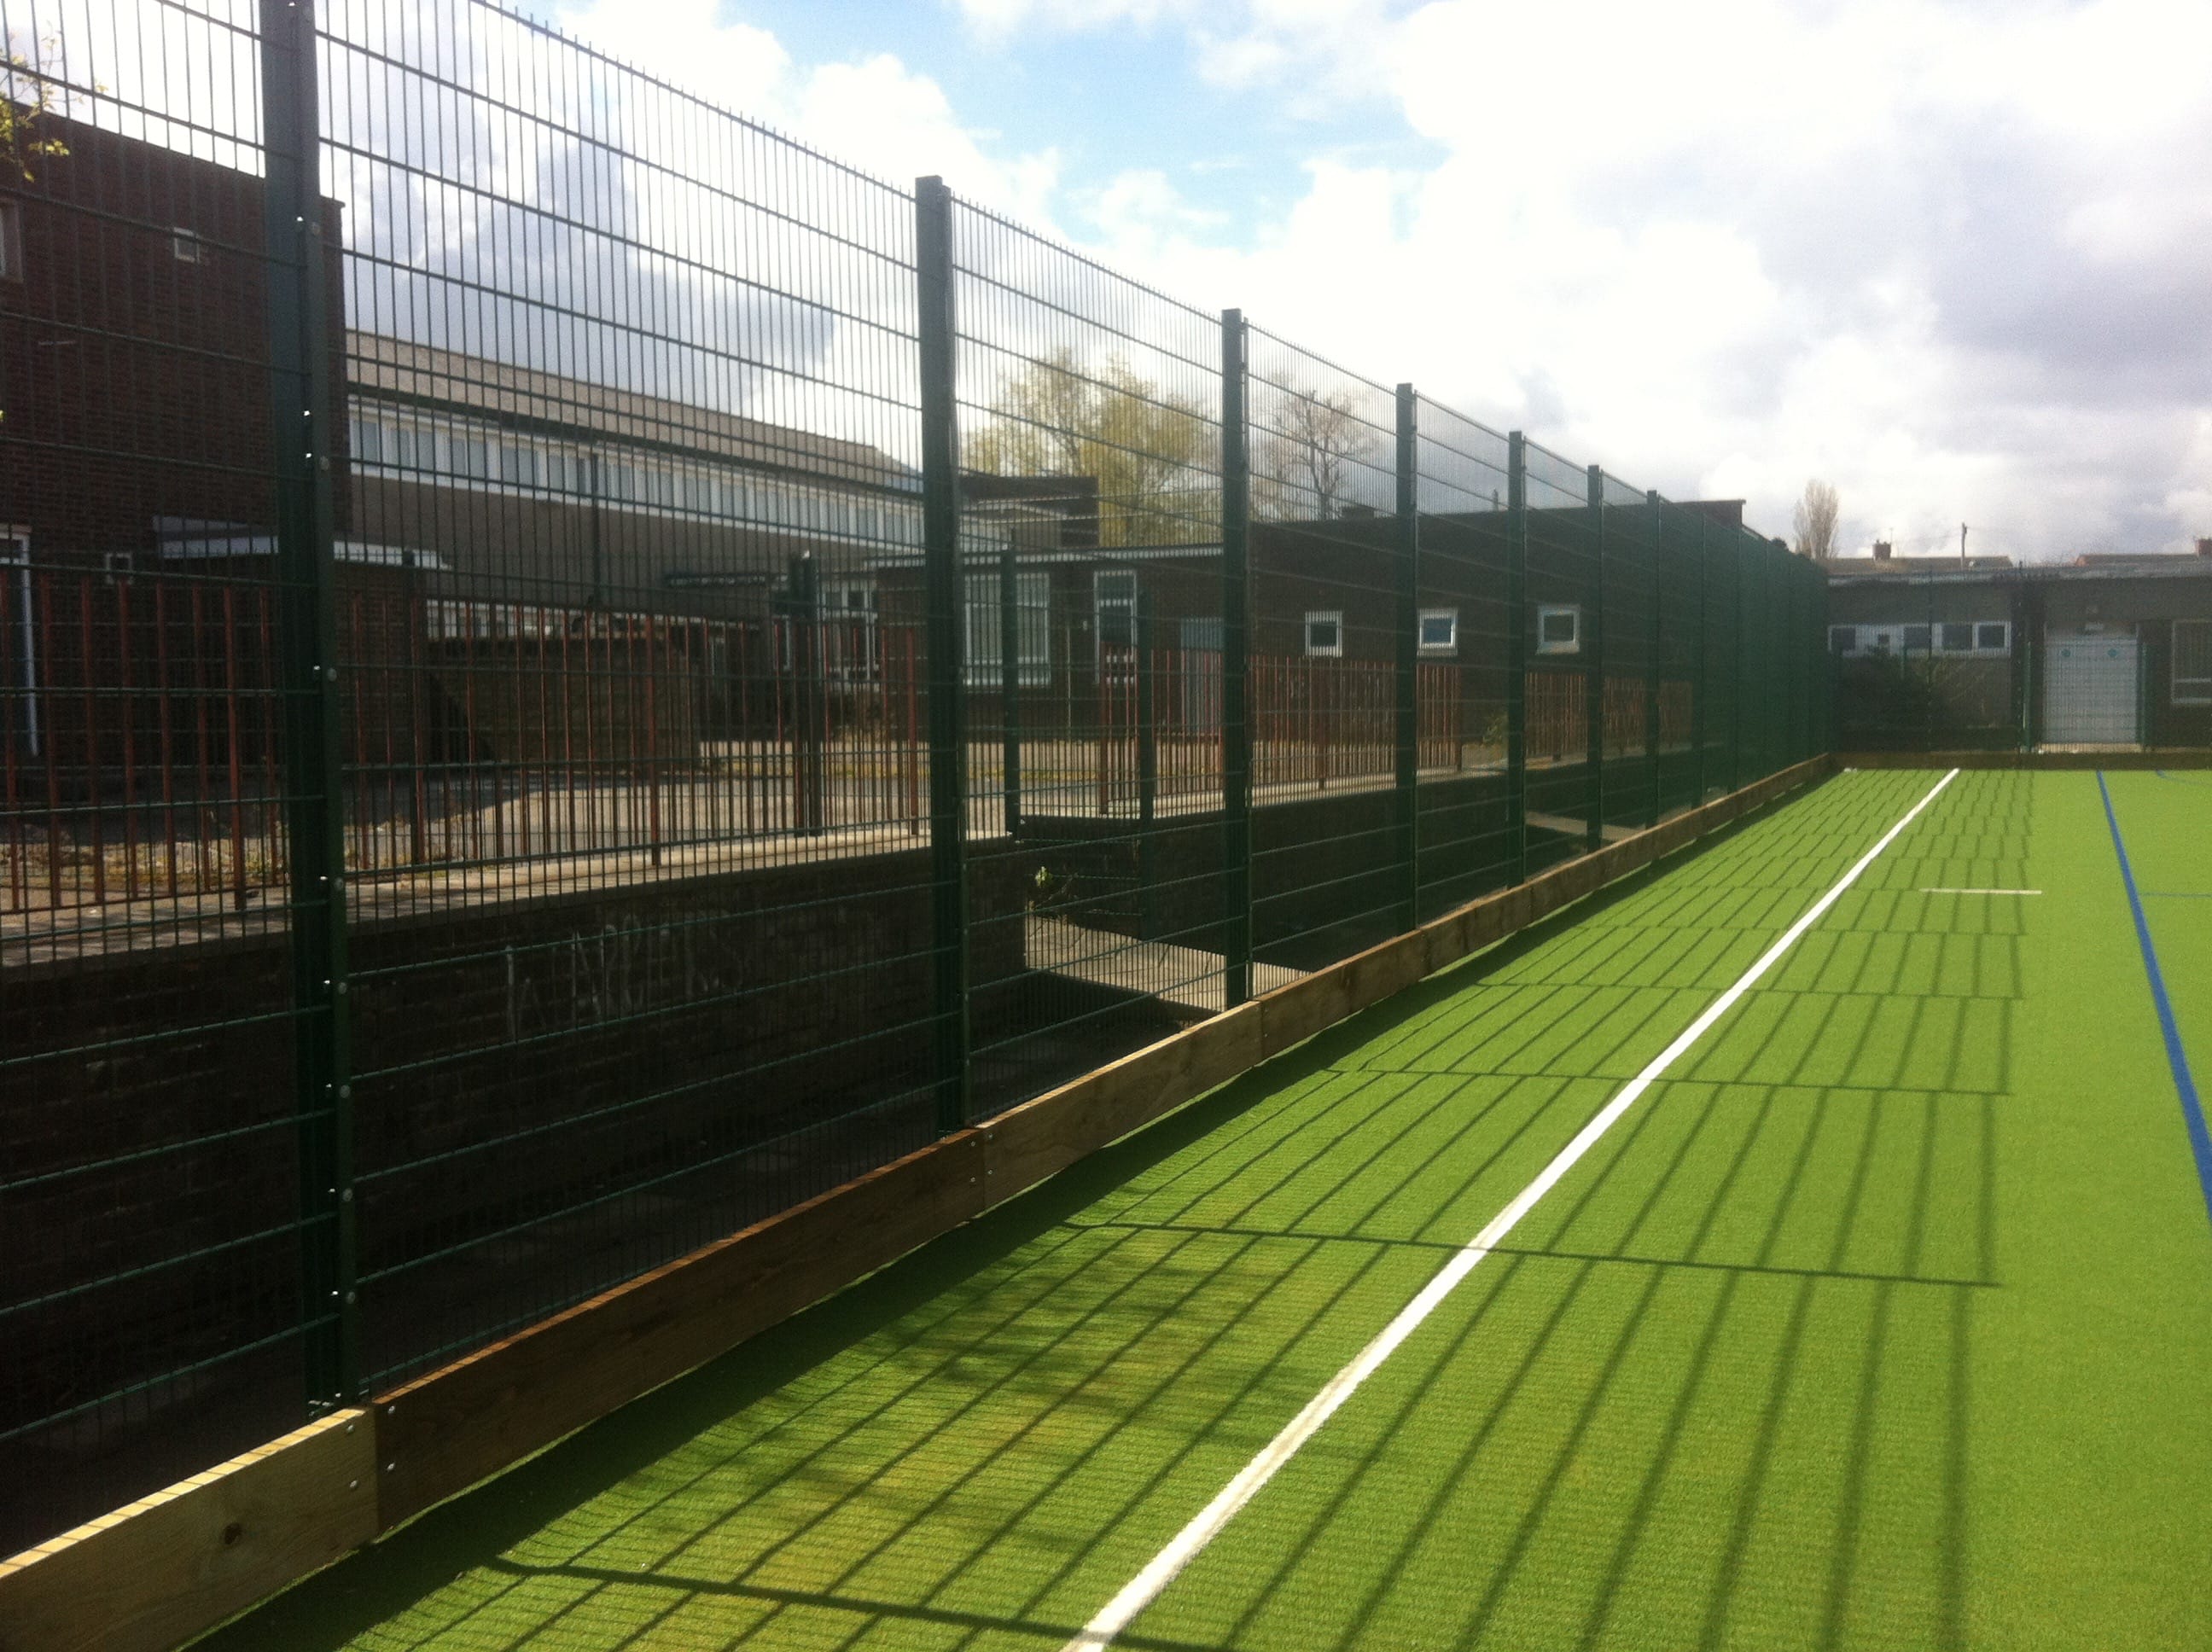 fencing around sports pitch